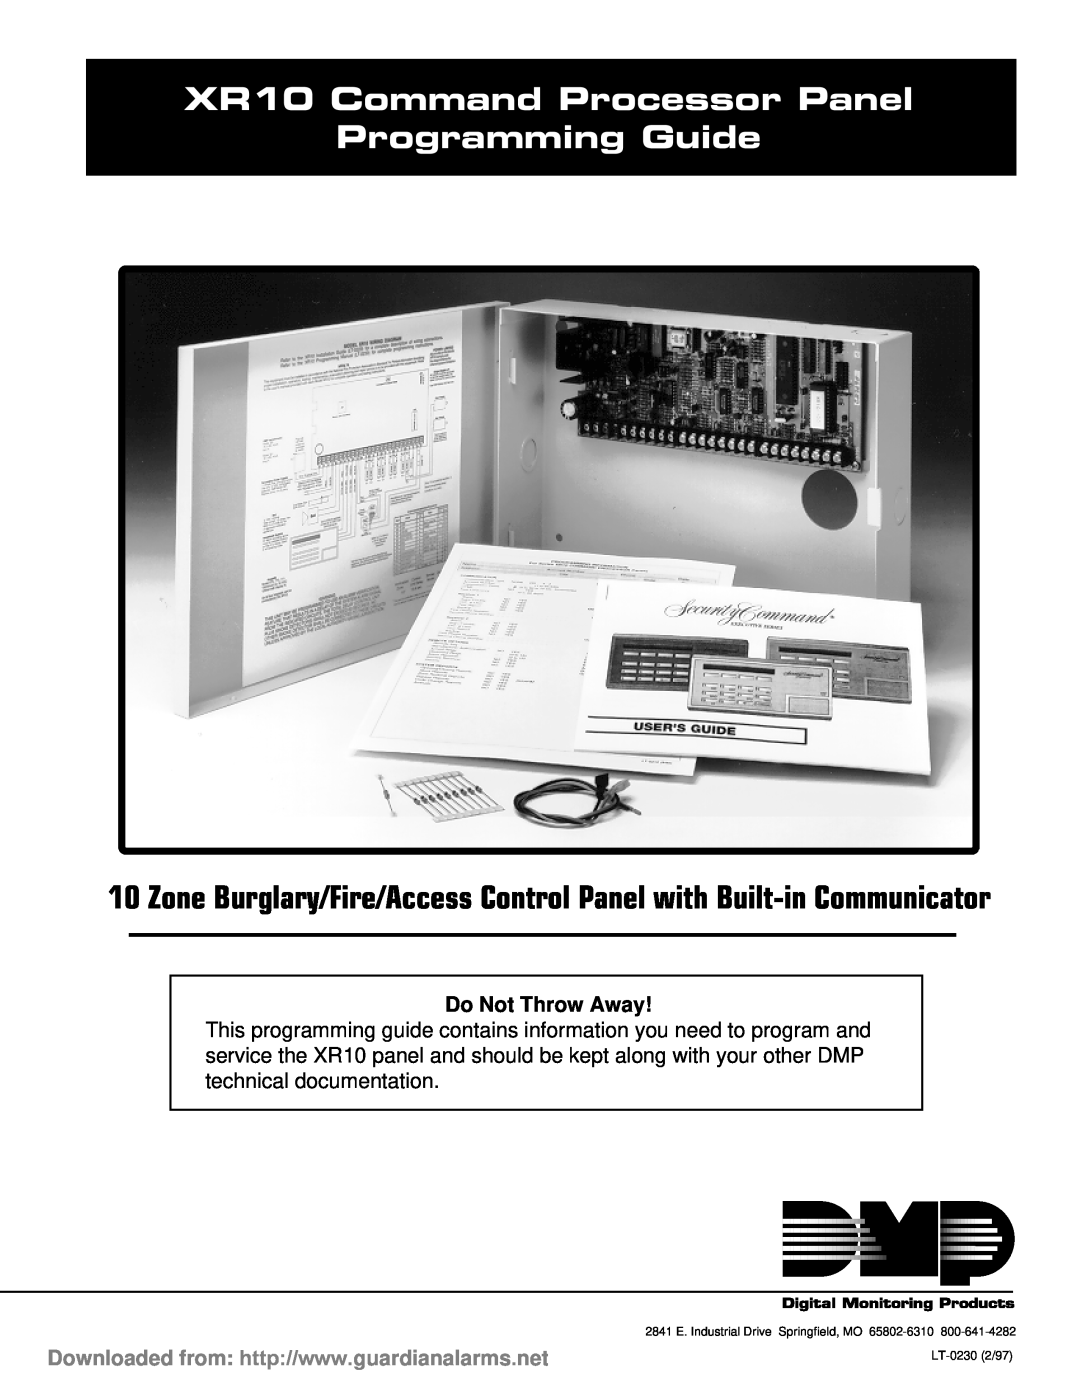 DMP Electronics manual Do Not Throw Away, XR10 Command Processor Panel Programming Guide, LT-02302/97 